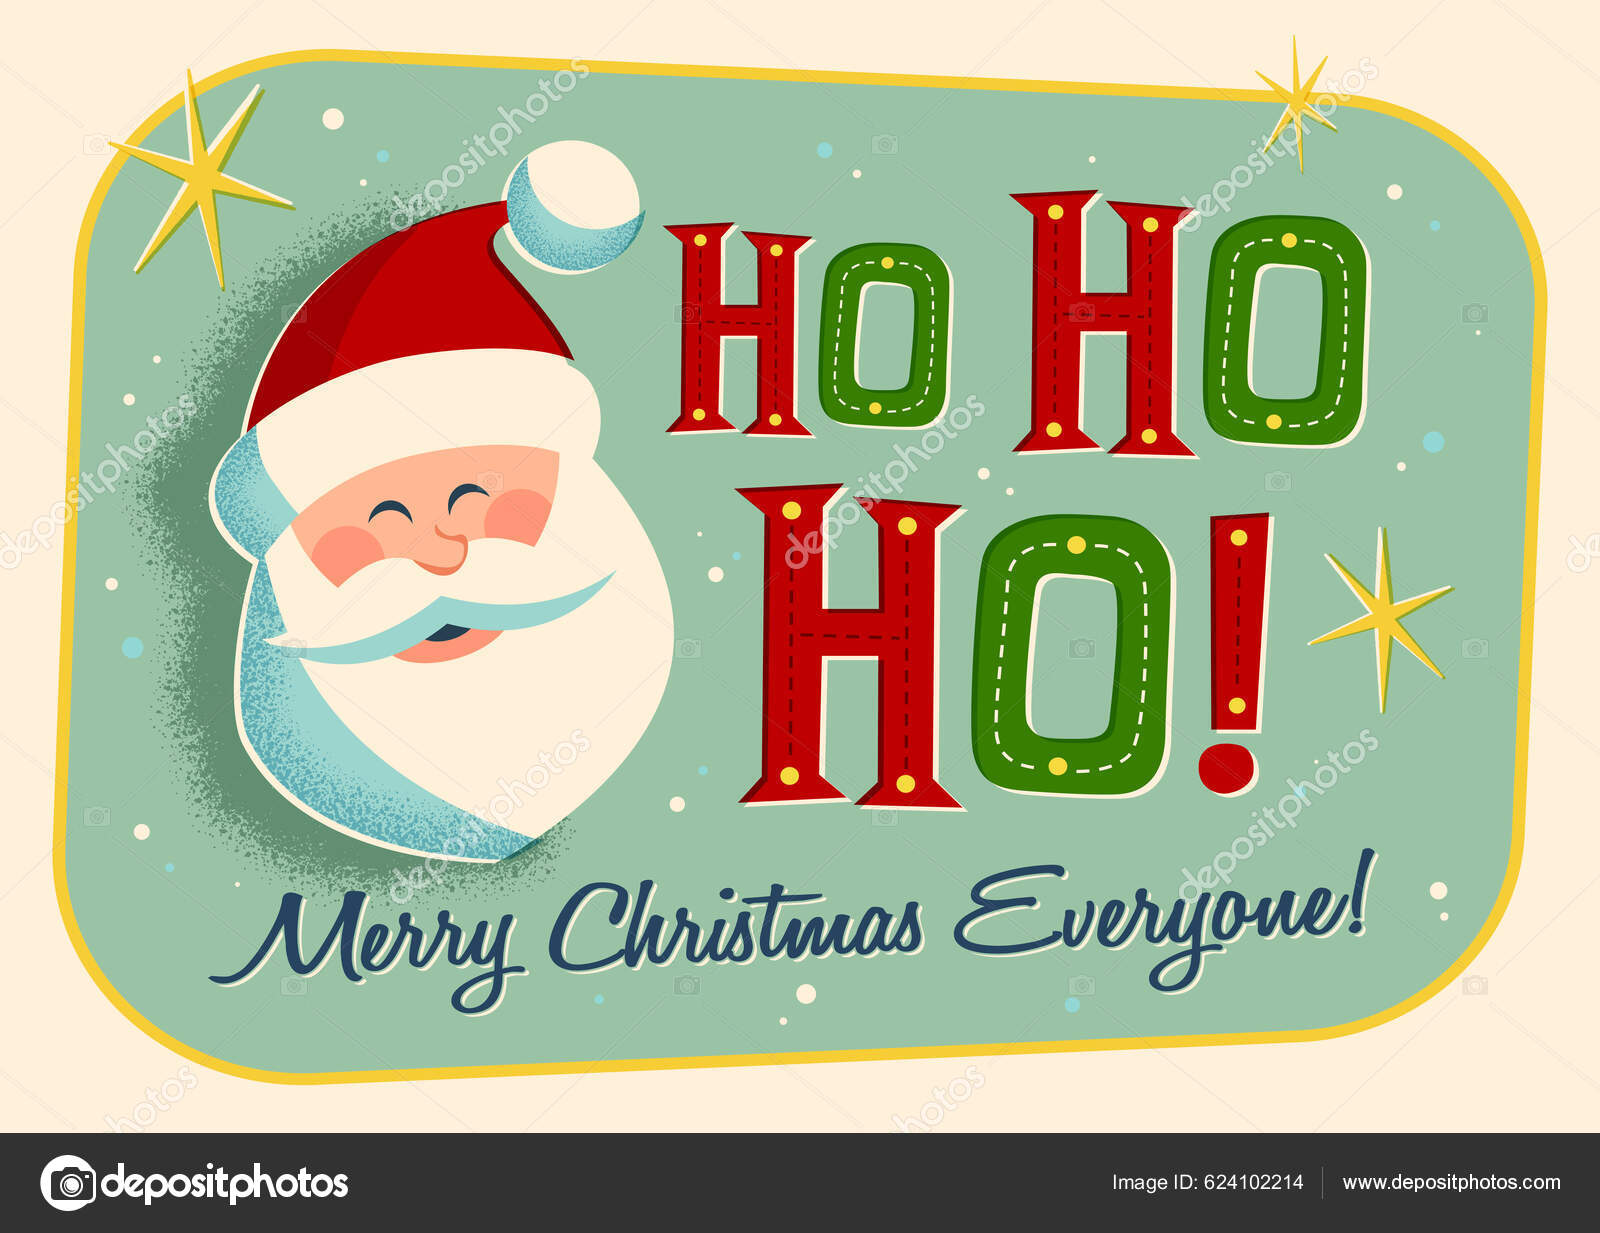 https://st5.depositphotos.com/6088656/62410/v/1600/depositphotos_624102214-stock-illustration-vintage-merry-christmas-greeting-card.jpg